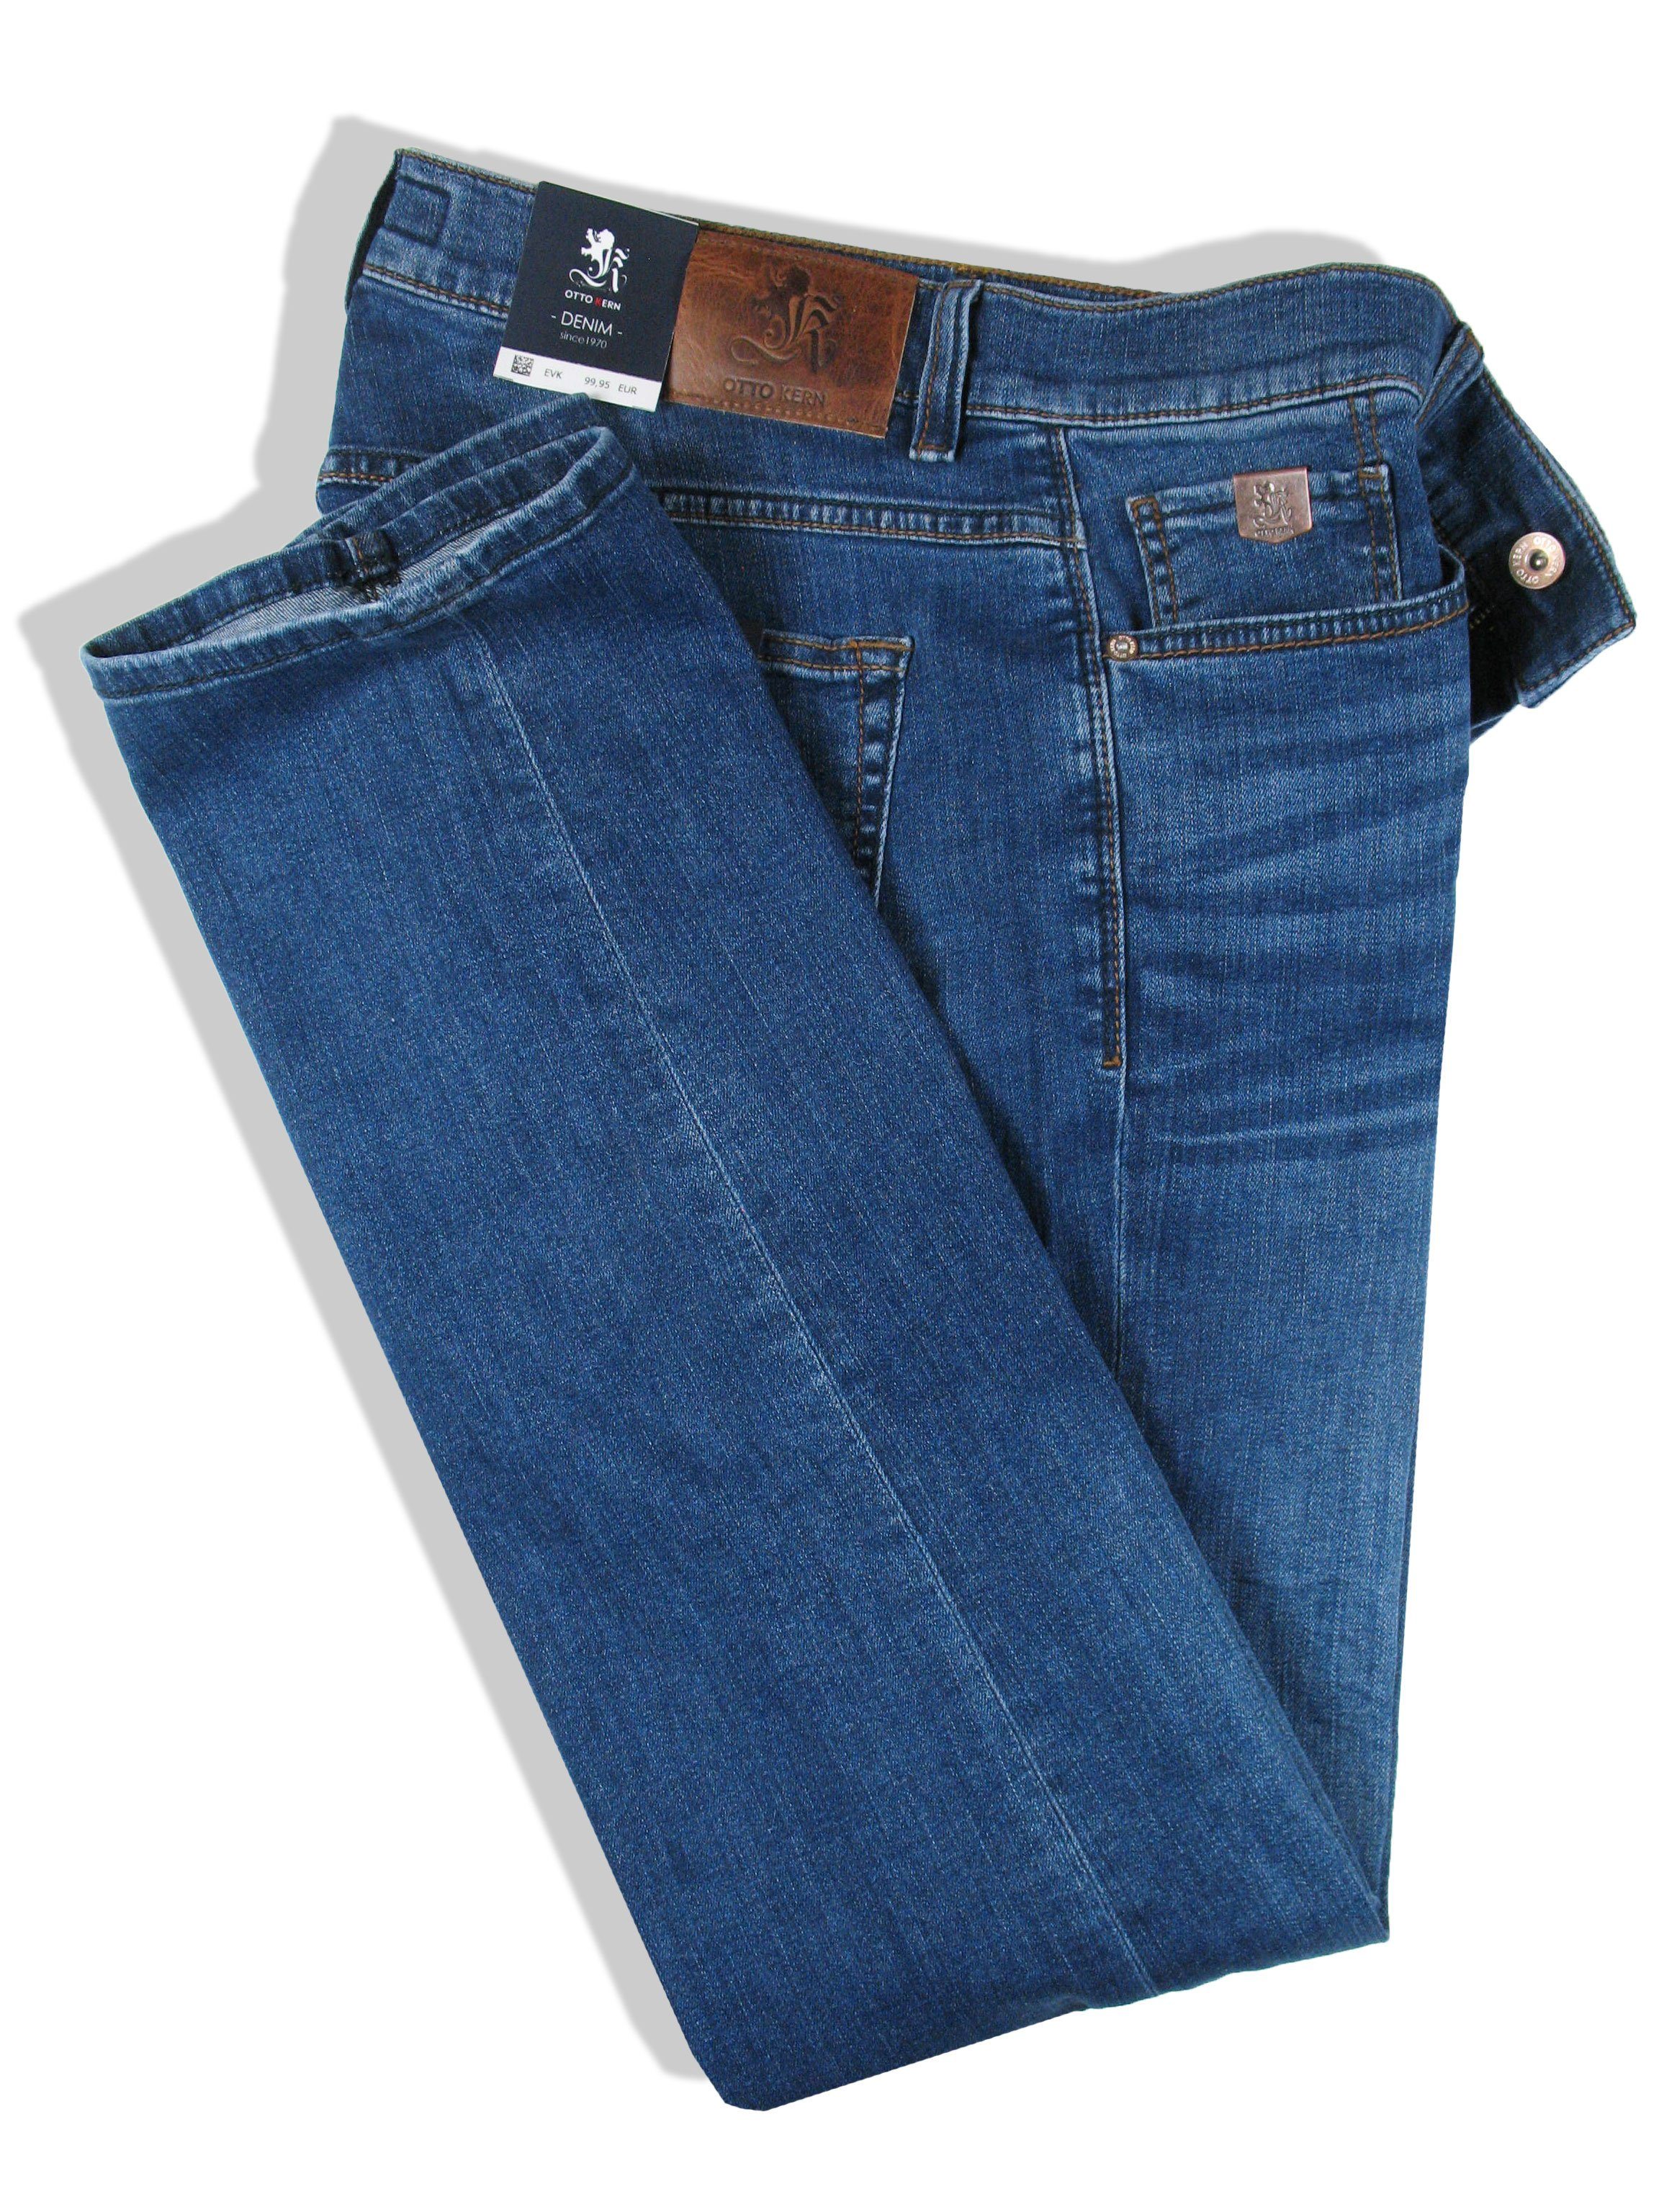 Otto Kern Ocean Blue Denim Kern Pure John Flex 5-Pocket-Jeans